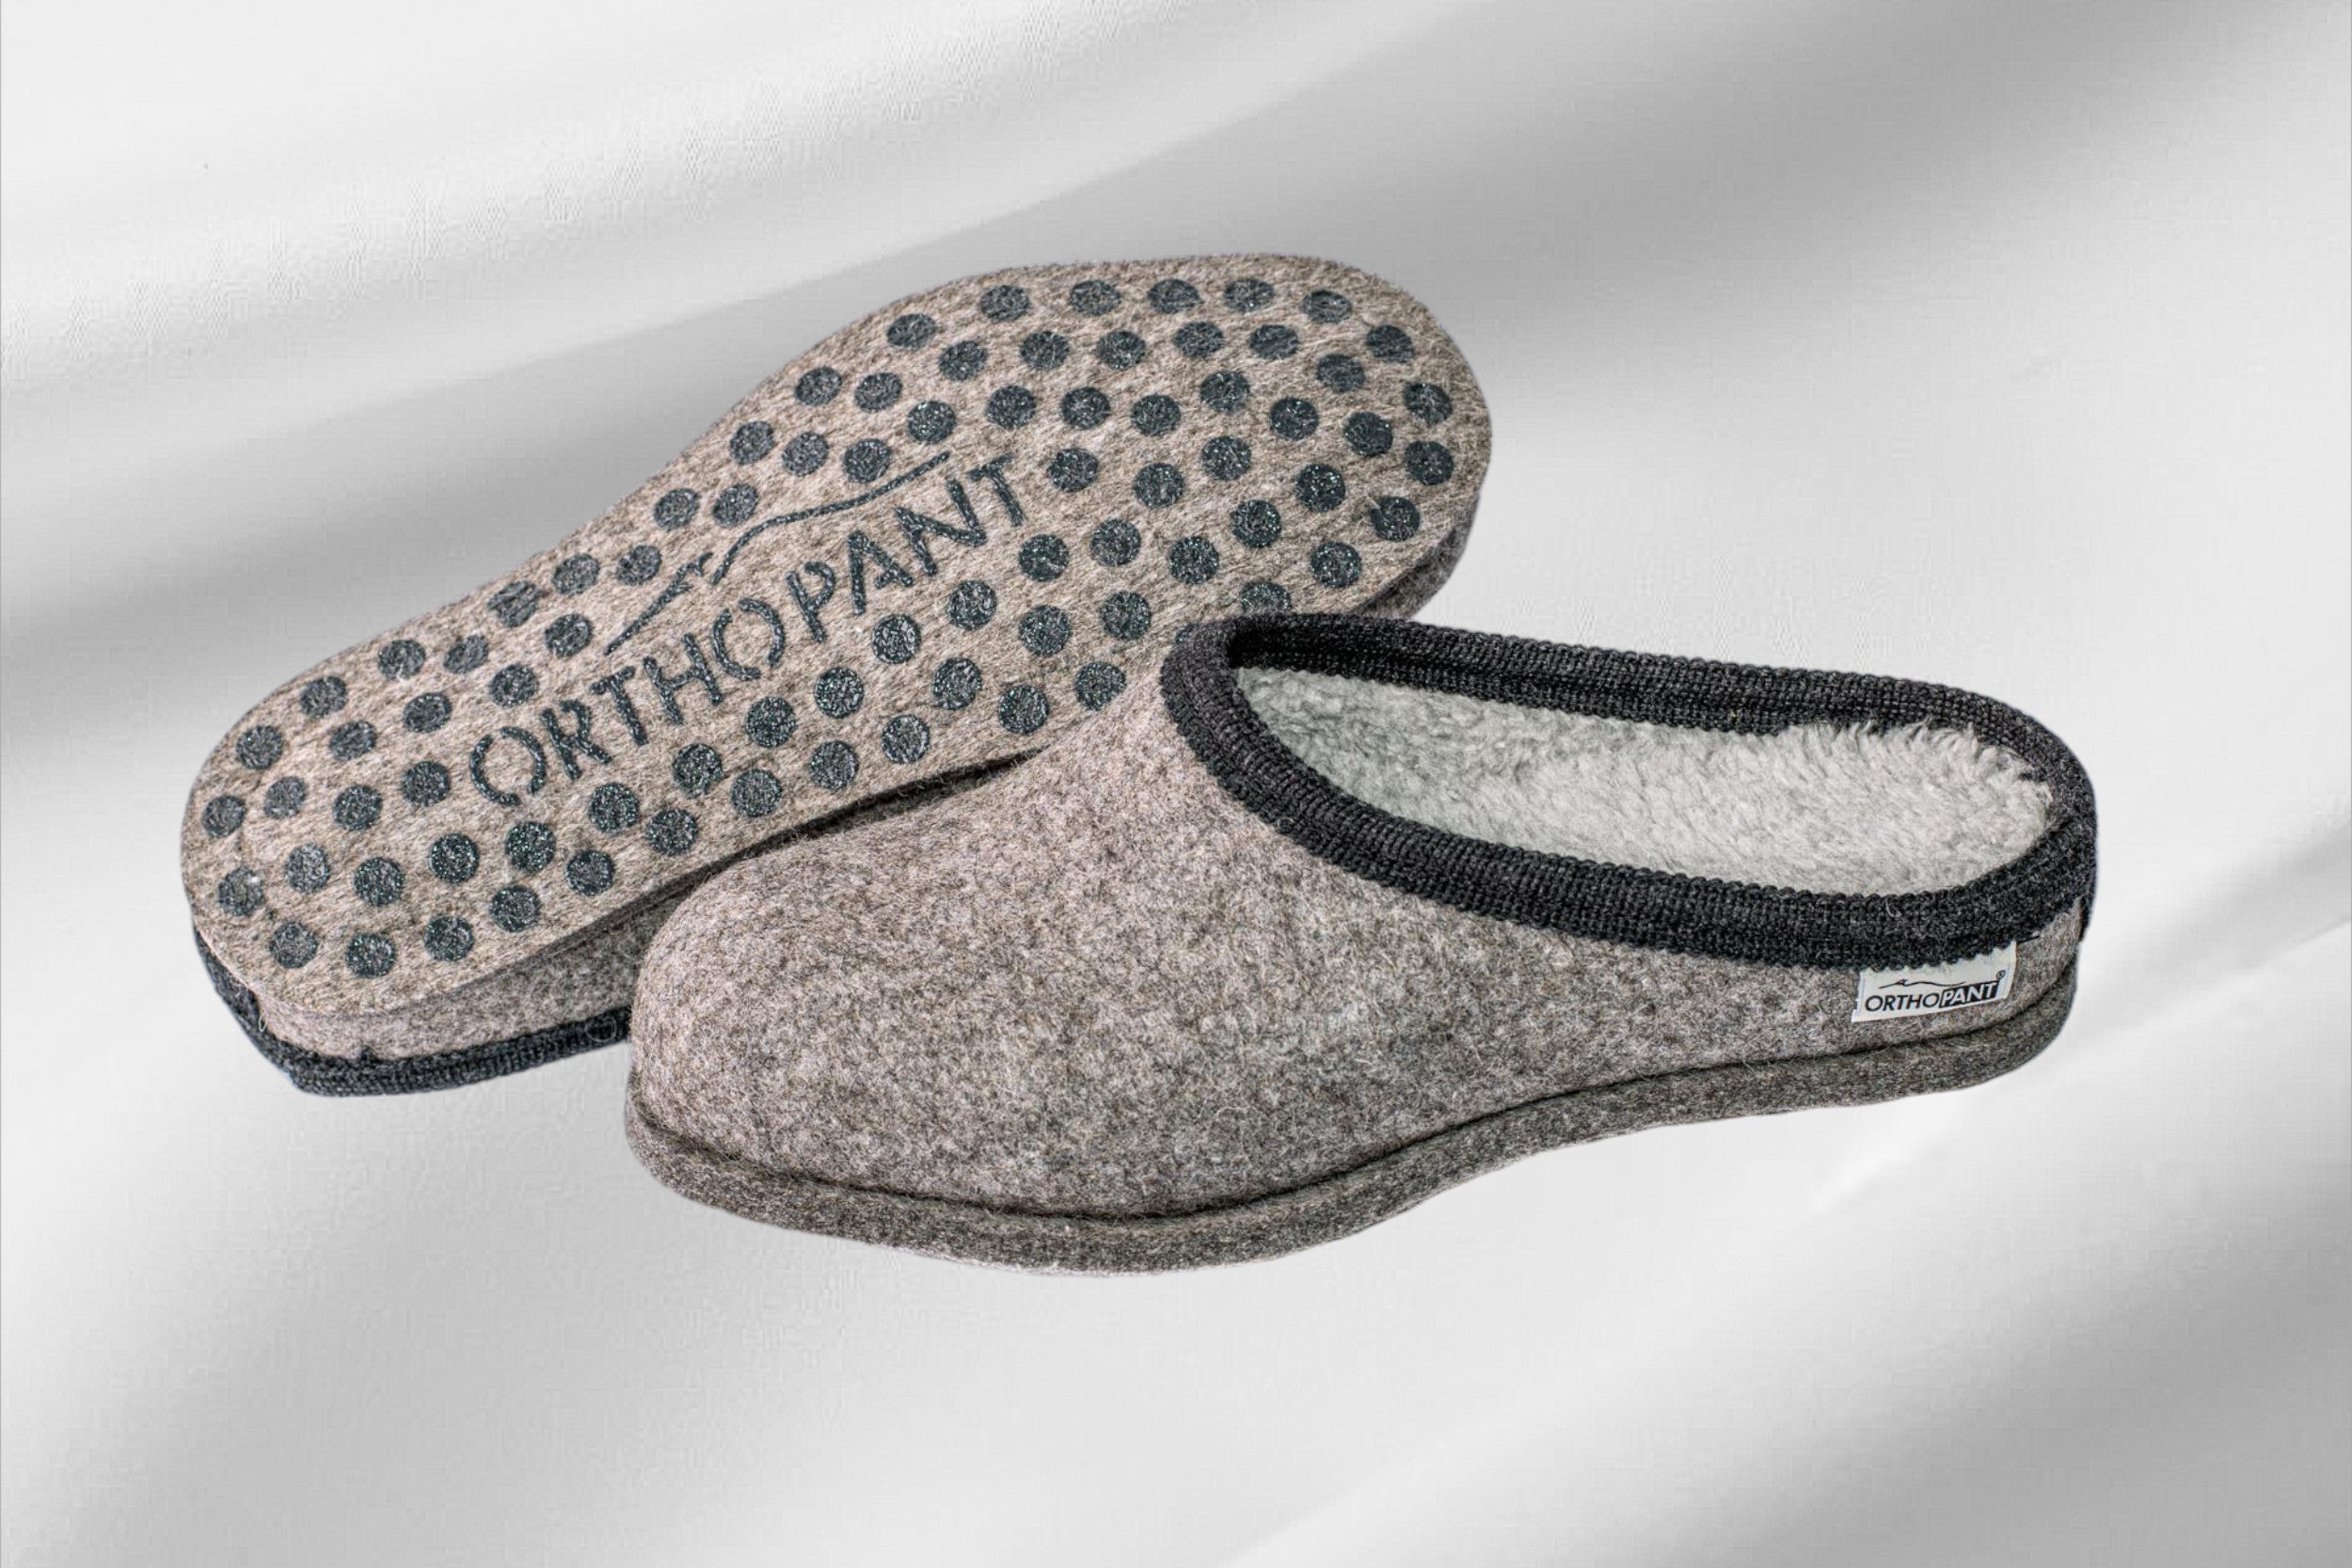 Pantofole in feltro BAITA - grigio con bordo nero